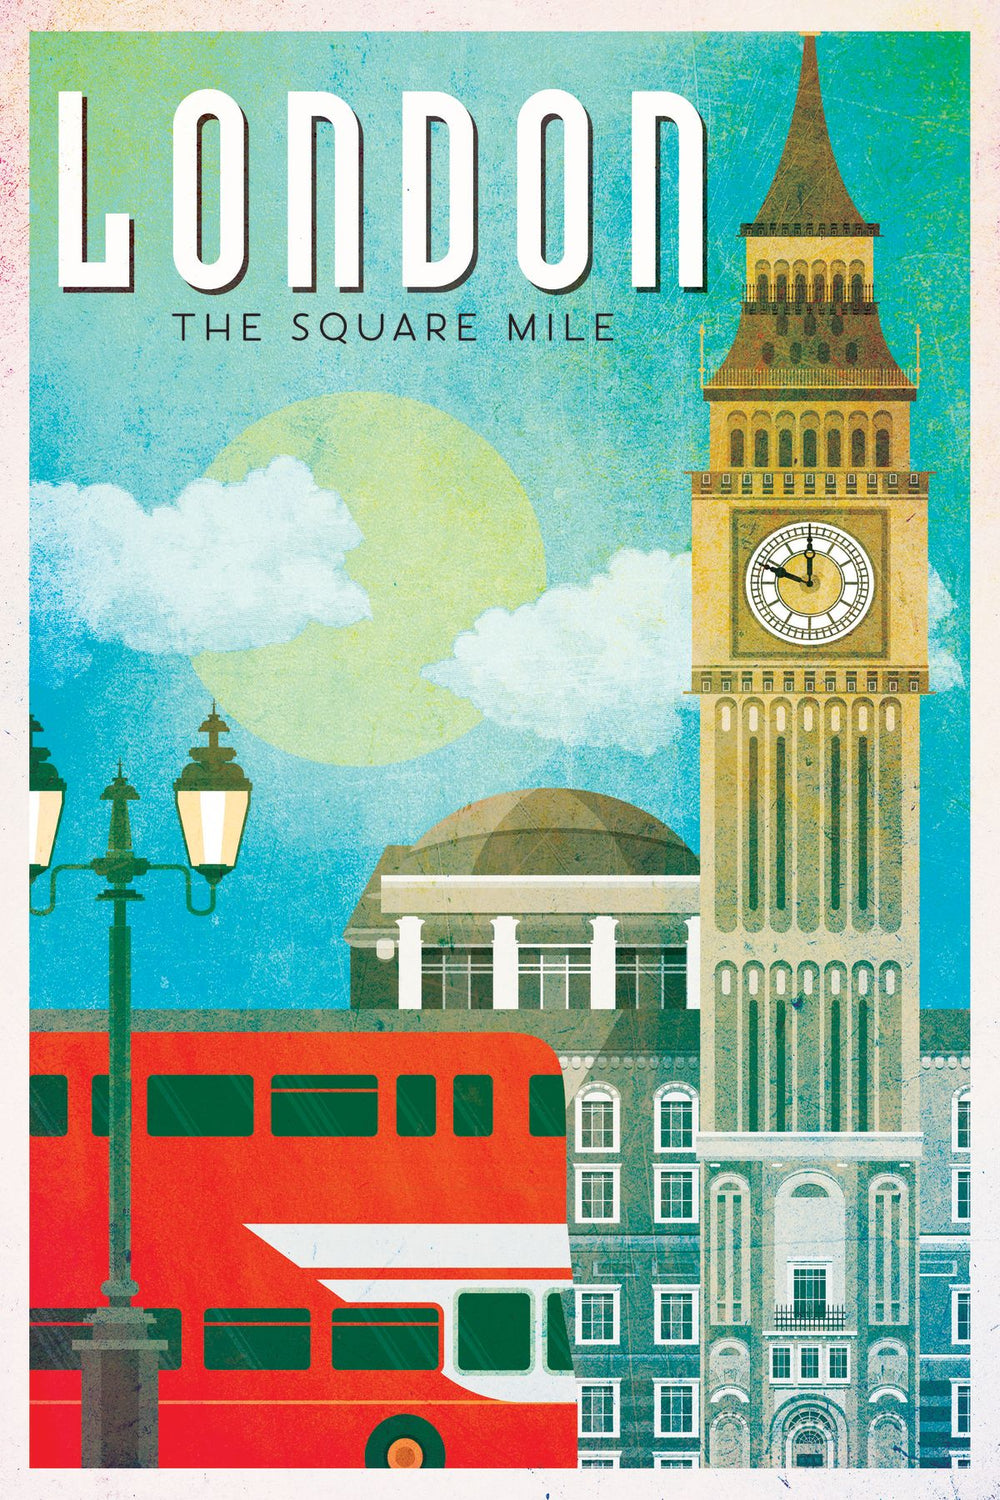 Big Ben London Tourism Vintage Poster